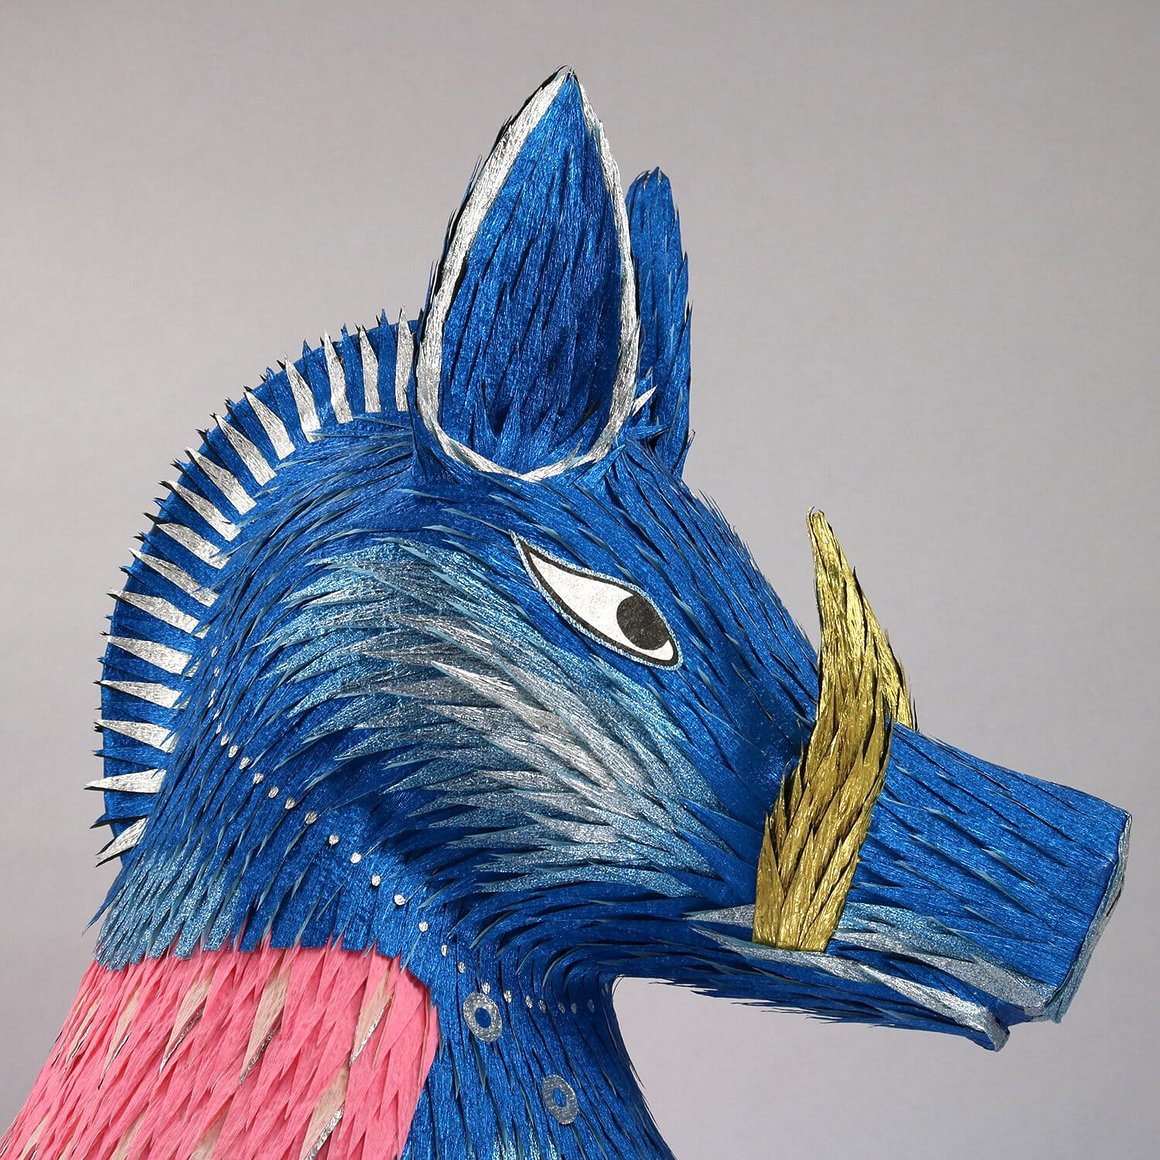 Roberto Benavidez - créature fantastique de la série  Illuminated Piñata 